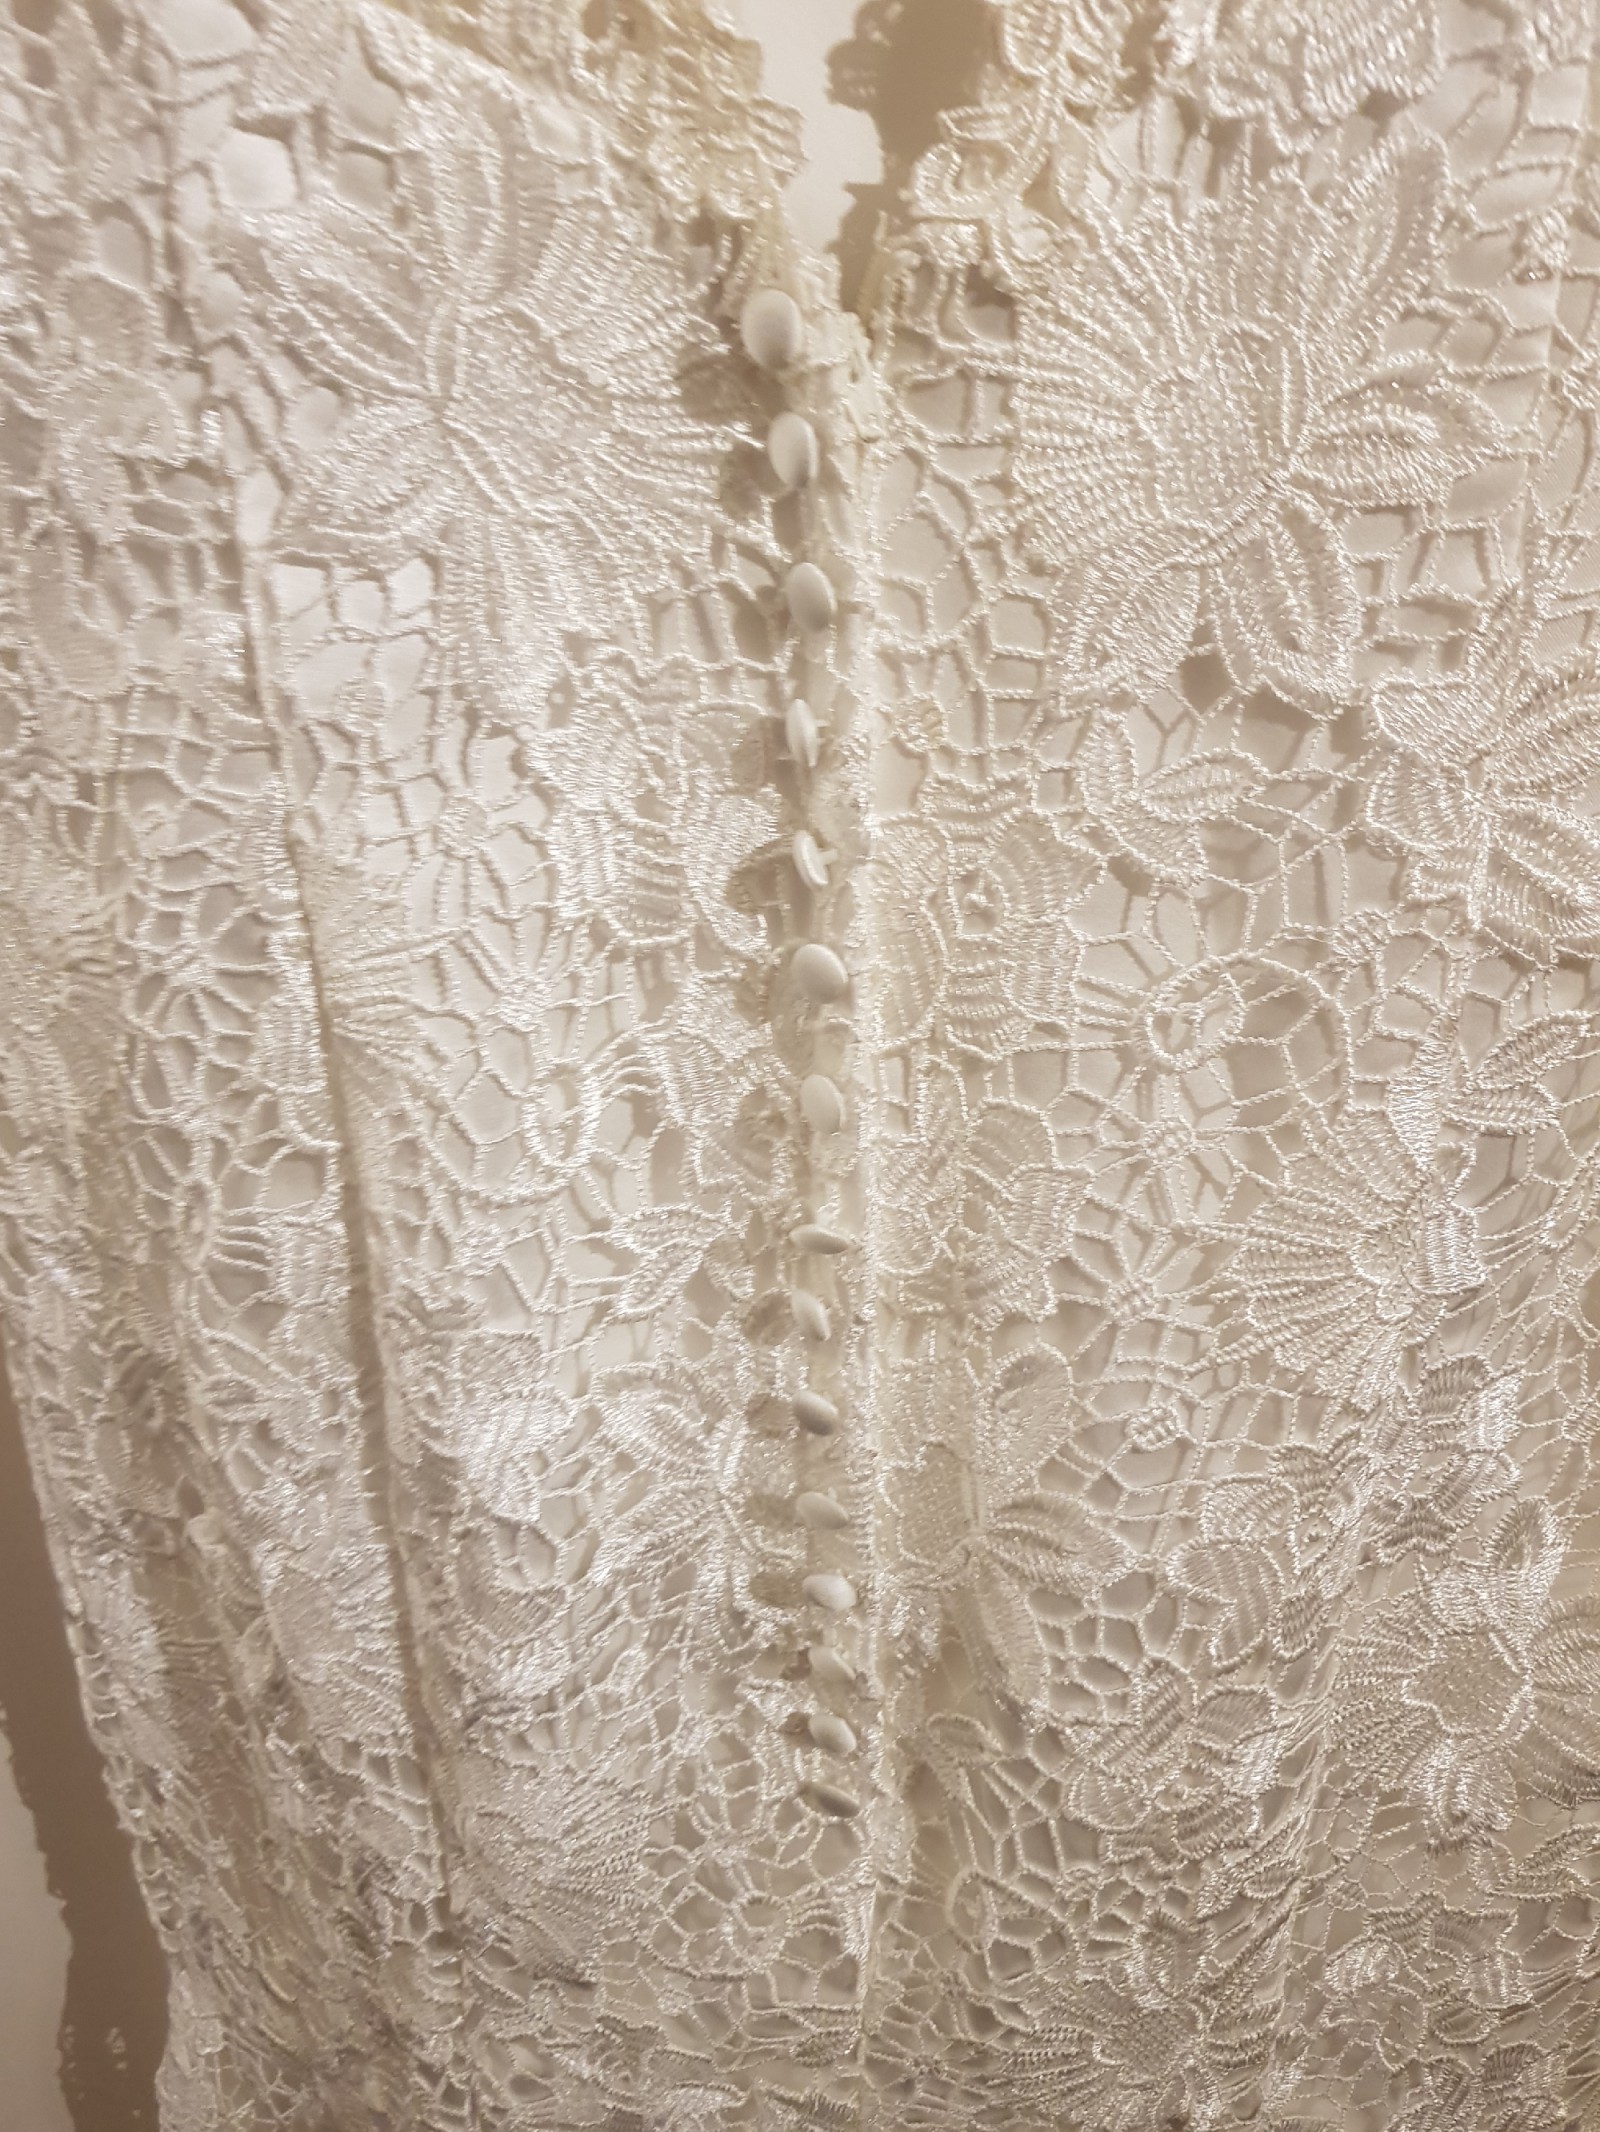 June Lacy New Wedding Dress